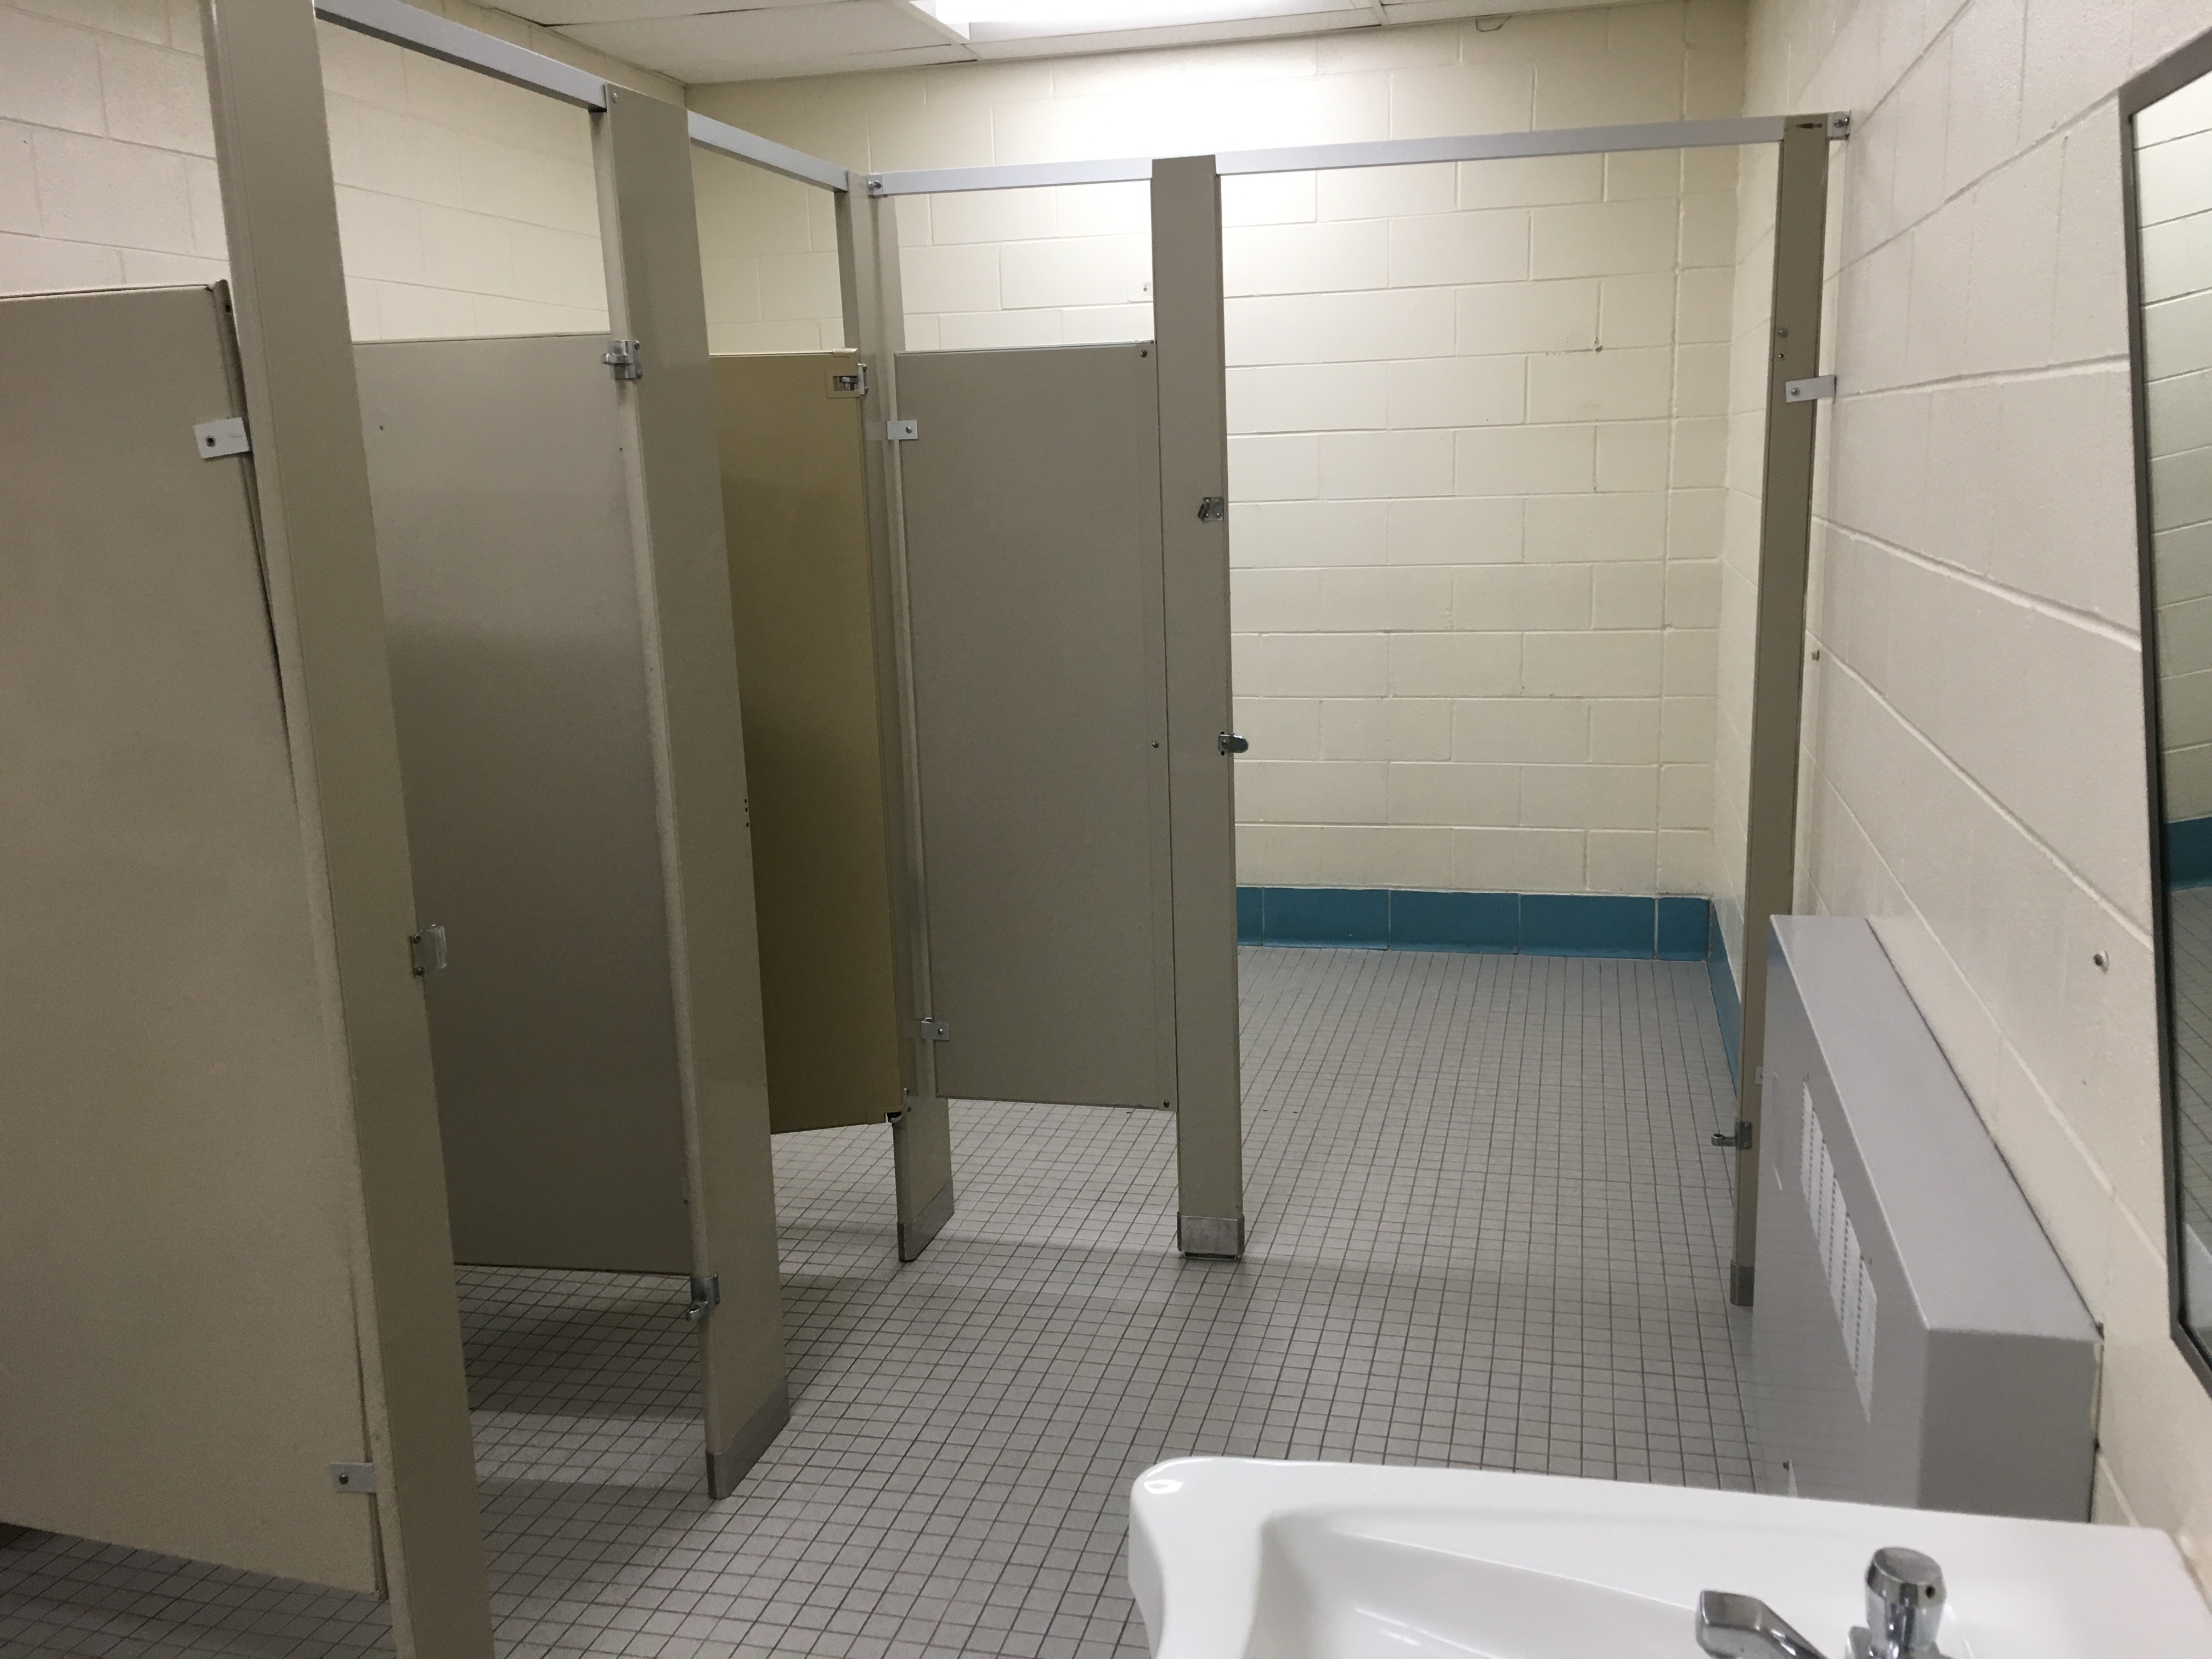 OPINION: Batavia’s busted bathrooms